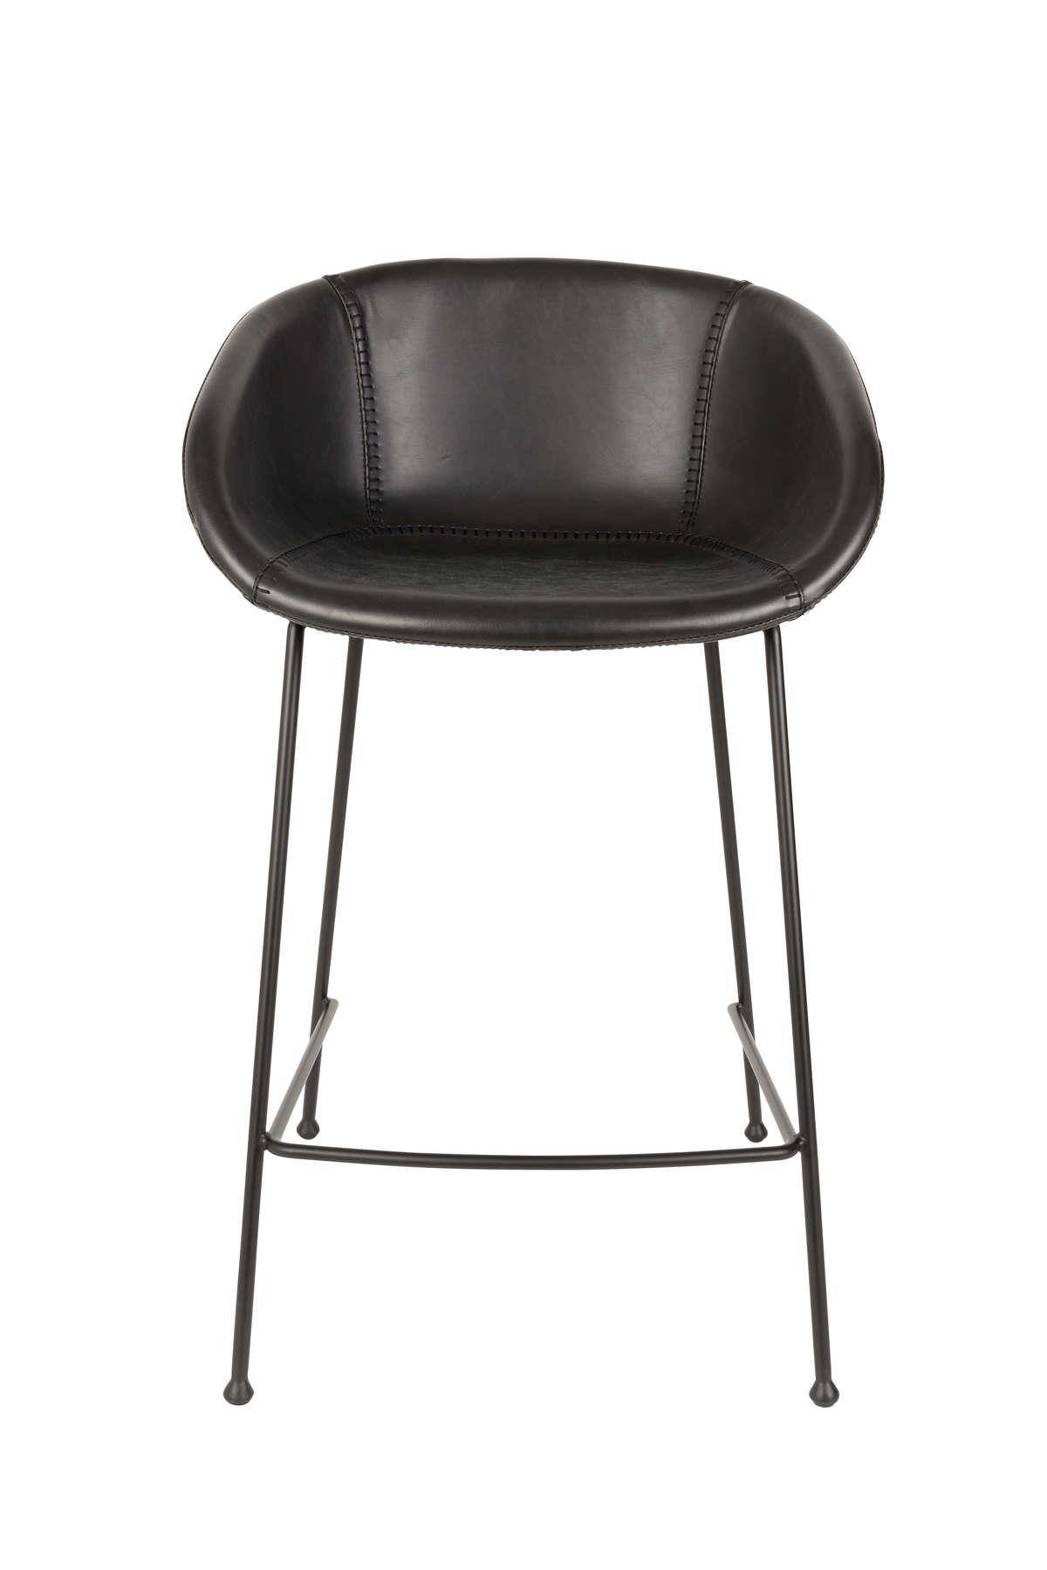 Zuiver :: Hoker/stołek barowy Feston czarny wys. 88,5 cm